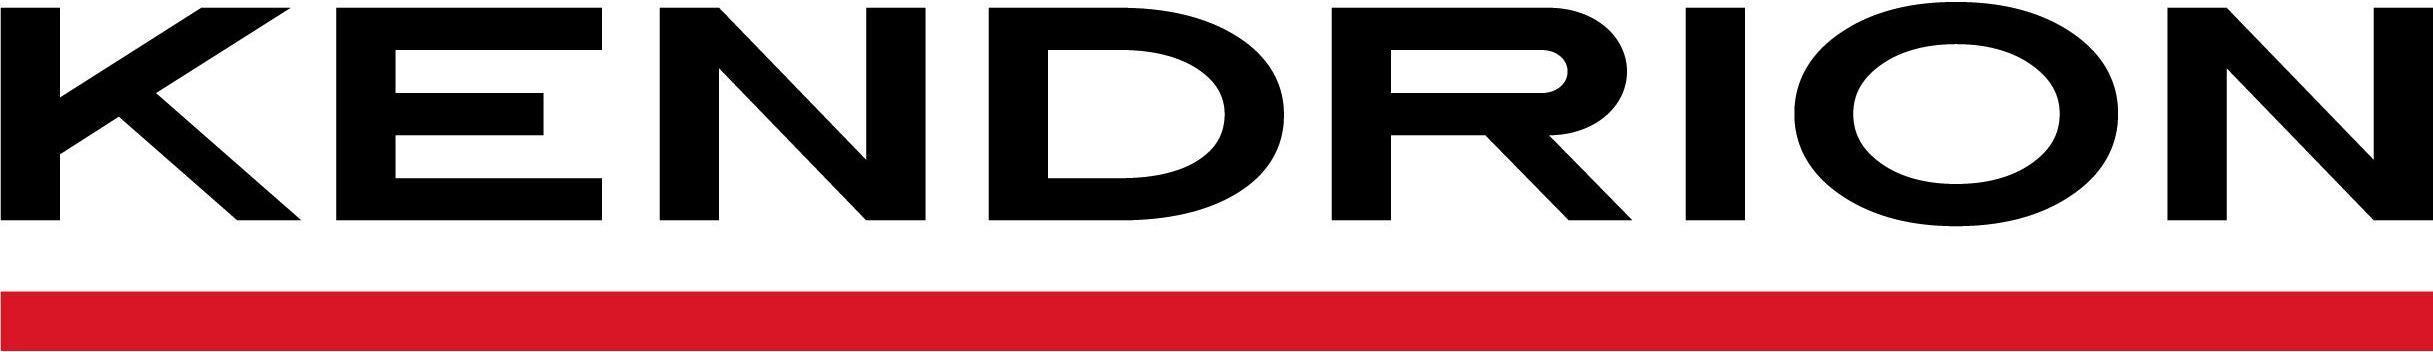 Logo Kendrion (Linz) GmbH